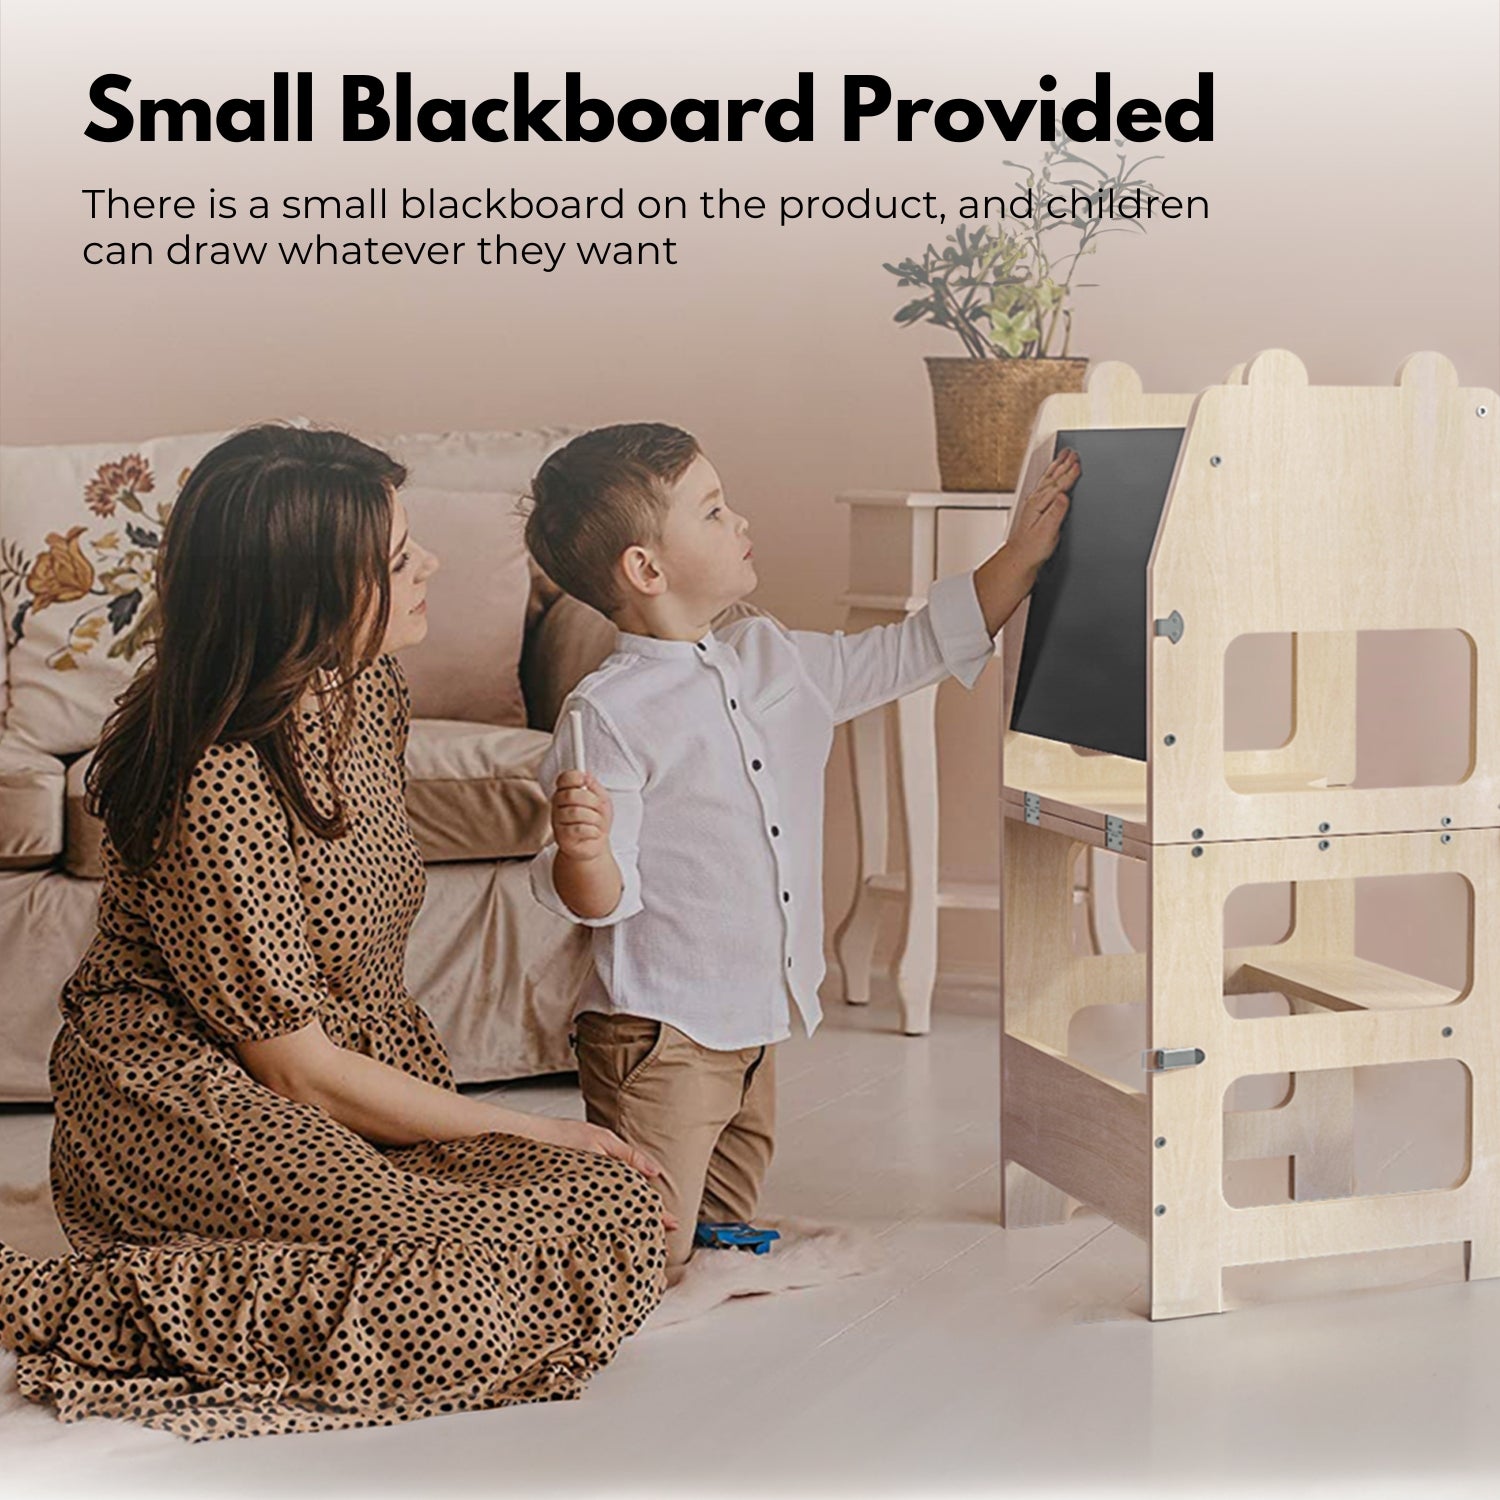 EKKIO Folding Kitchen Kids Step Stool with Chalkboard - Bear Ear design (Wood Color)